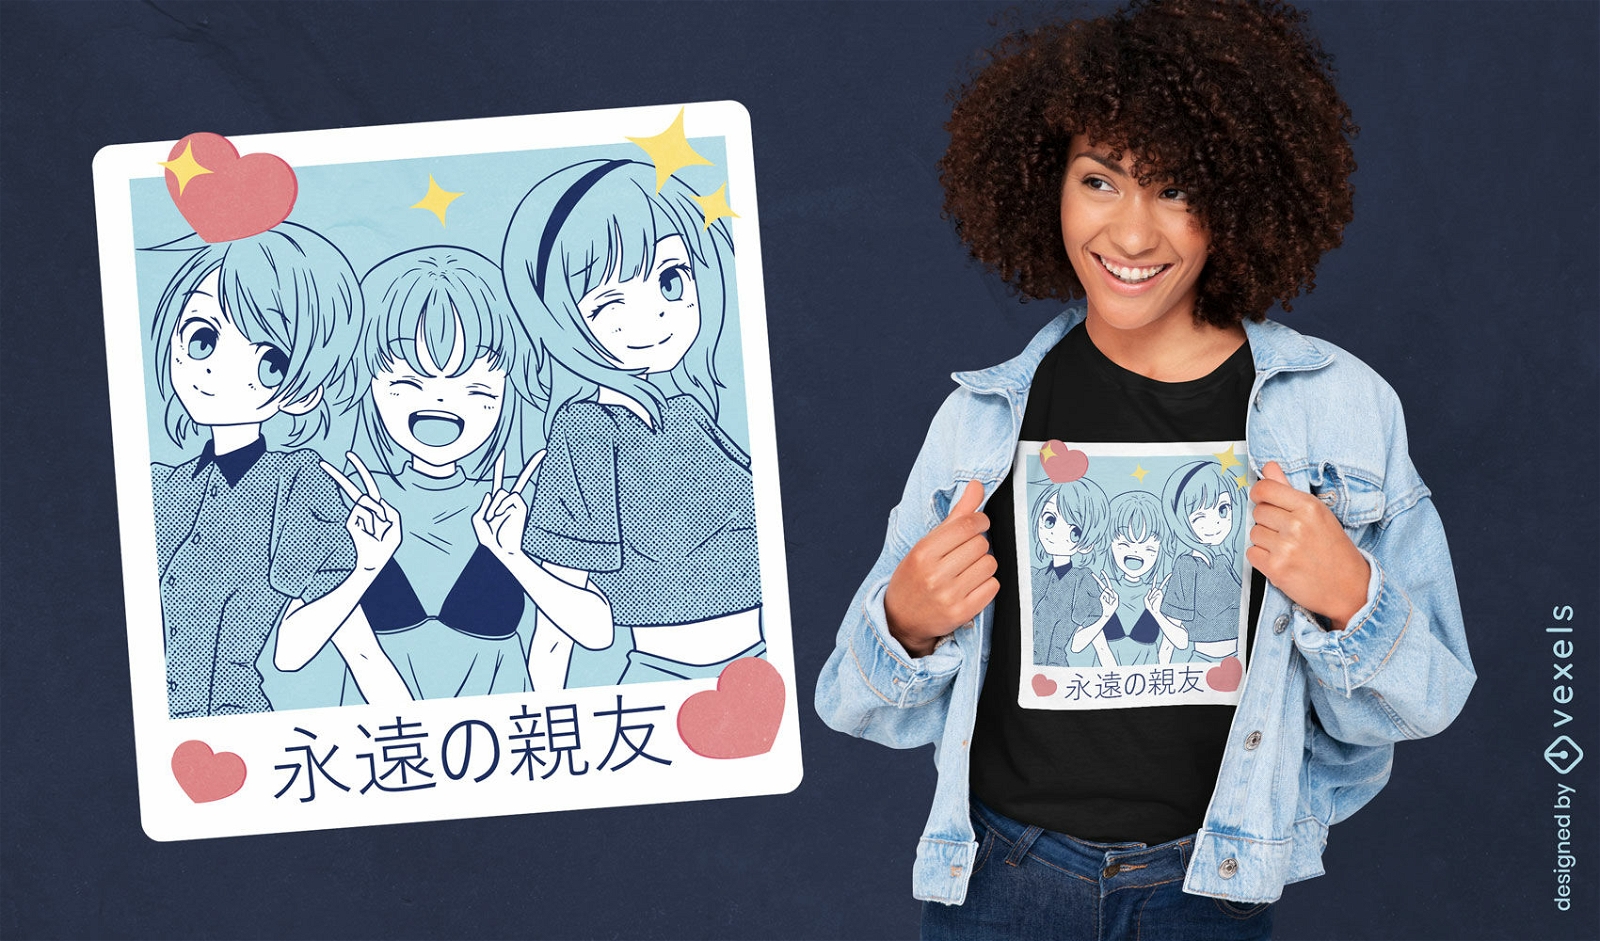 Anime friend group photo t-shirt design